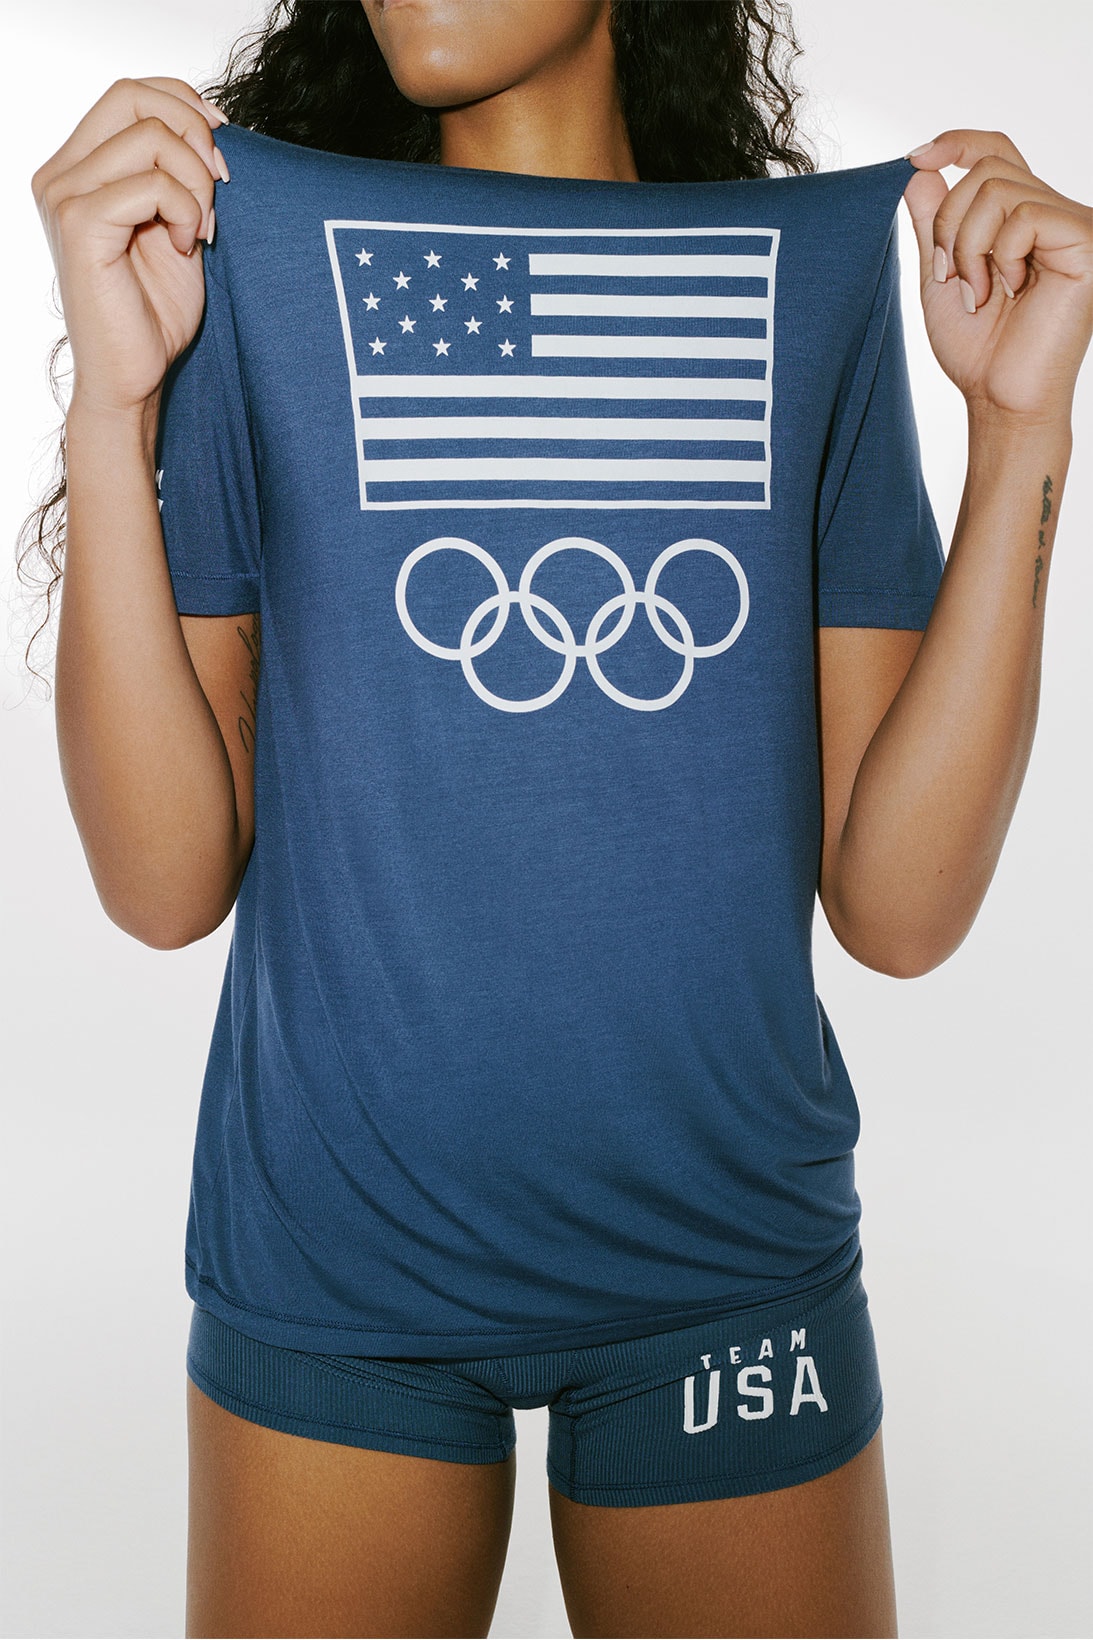 Team USA to Wear Kim Kardashian's Skims at the Olympics